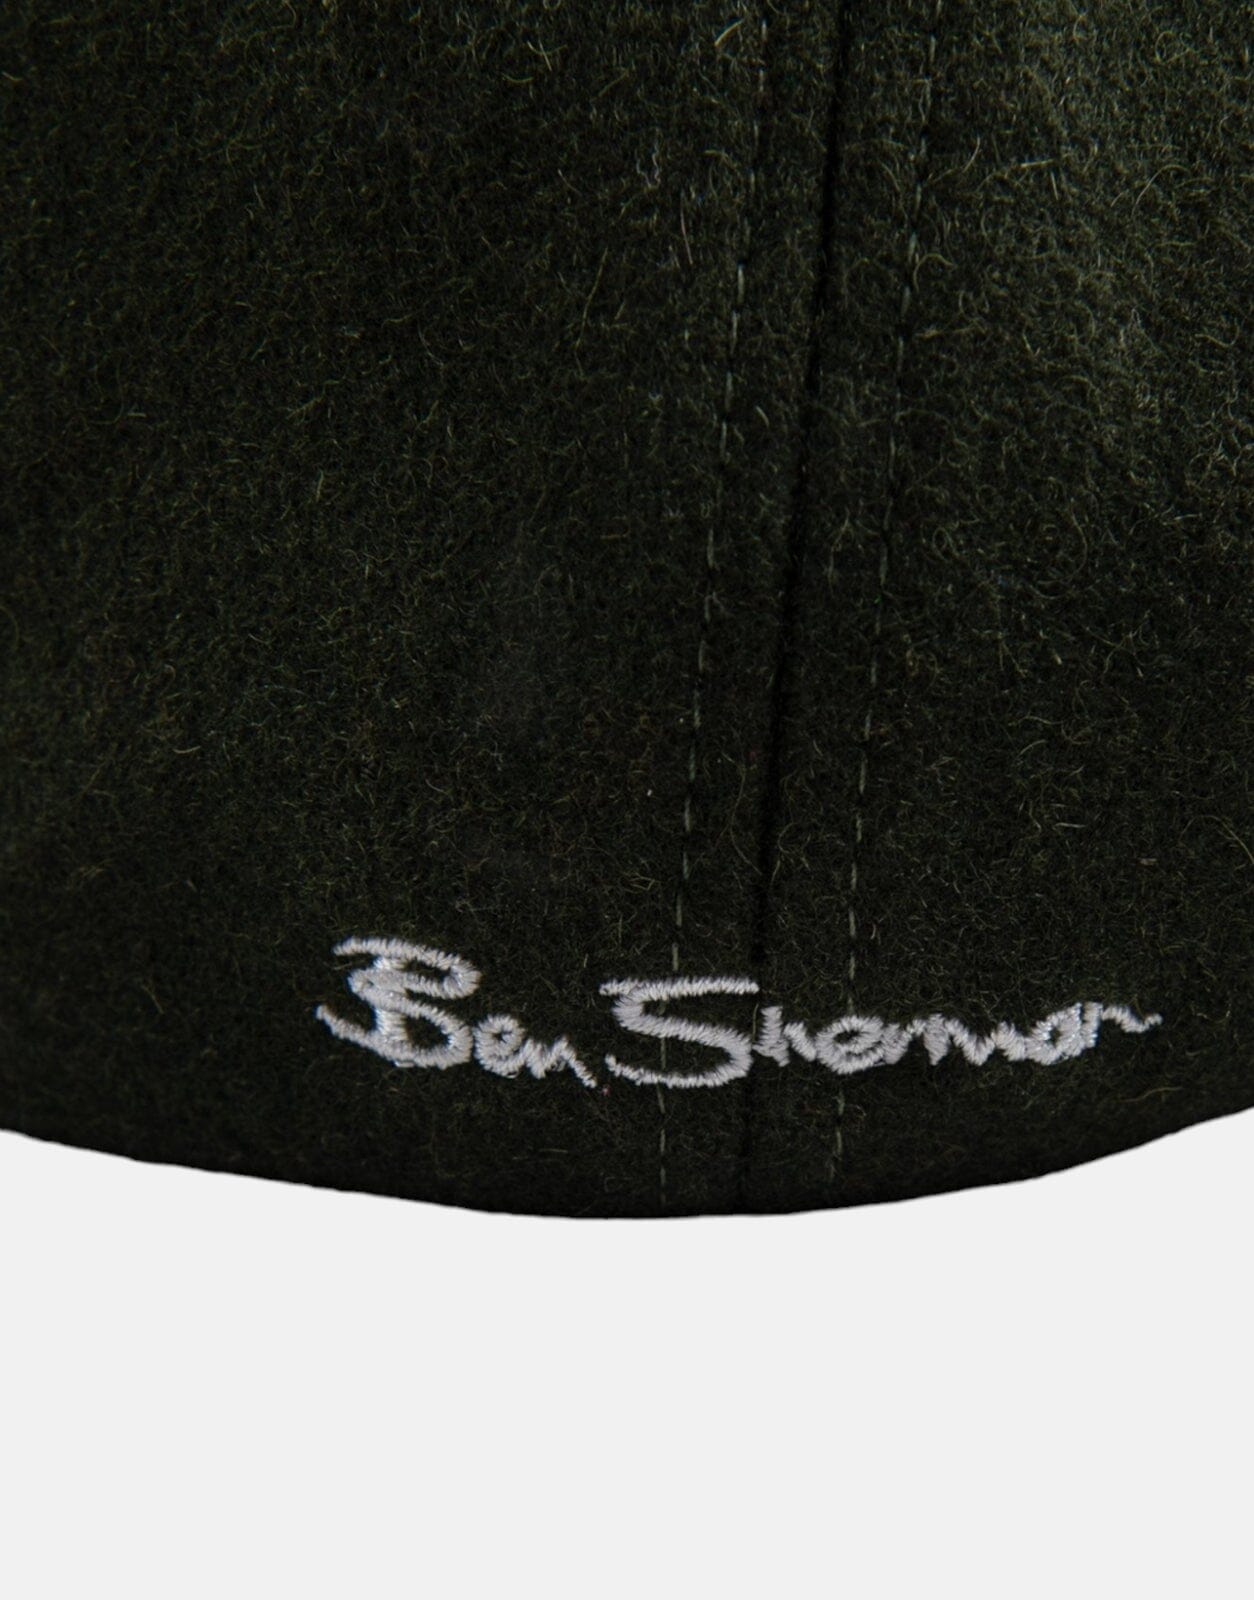 Ben Sherman Ivy Hat Olive - Subwear